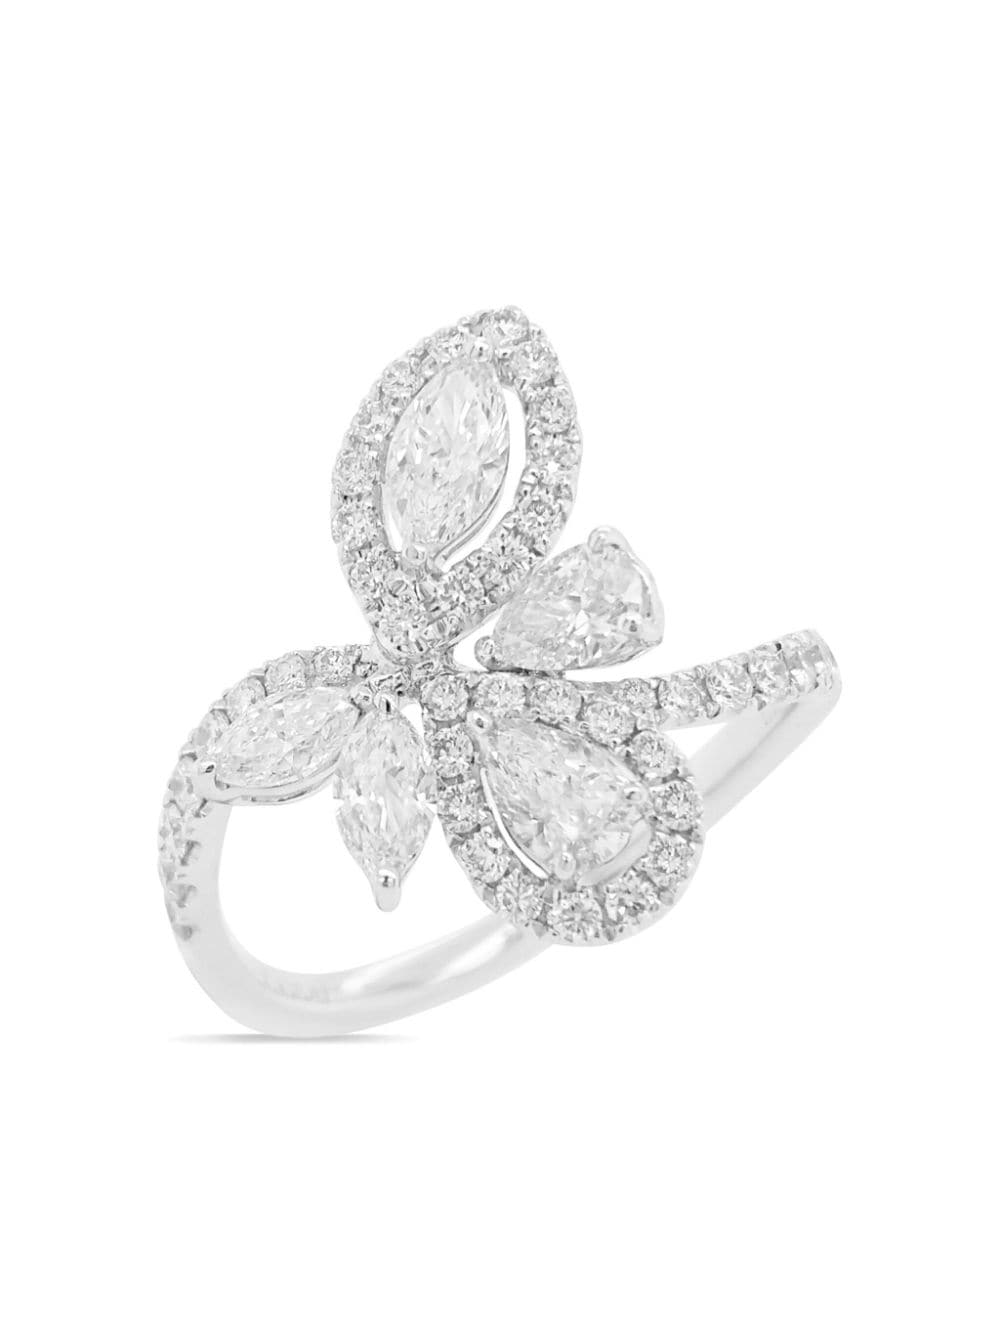 HYT Jewelry platinum and diamond ring - Silver von HYT Jewelry